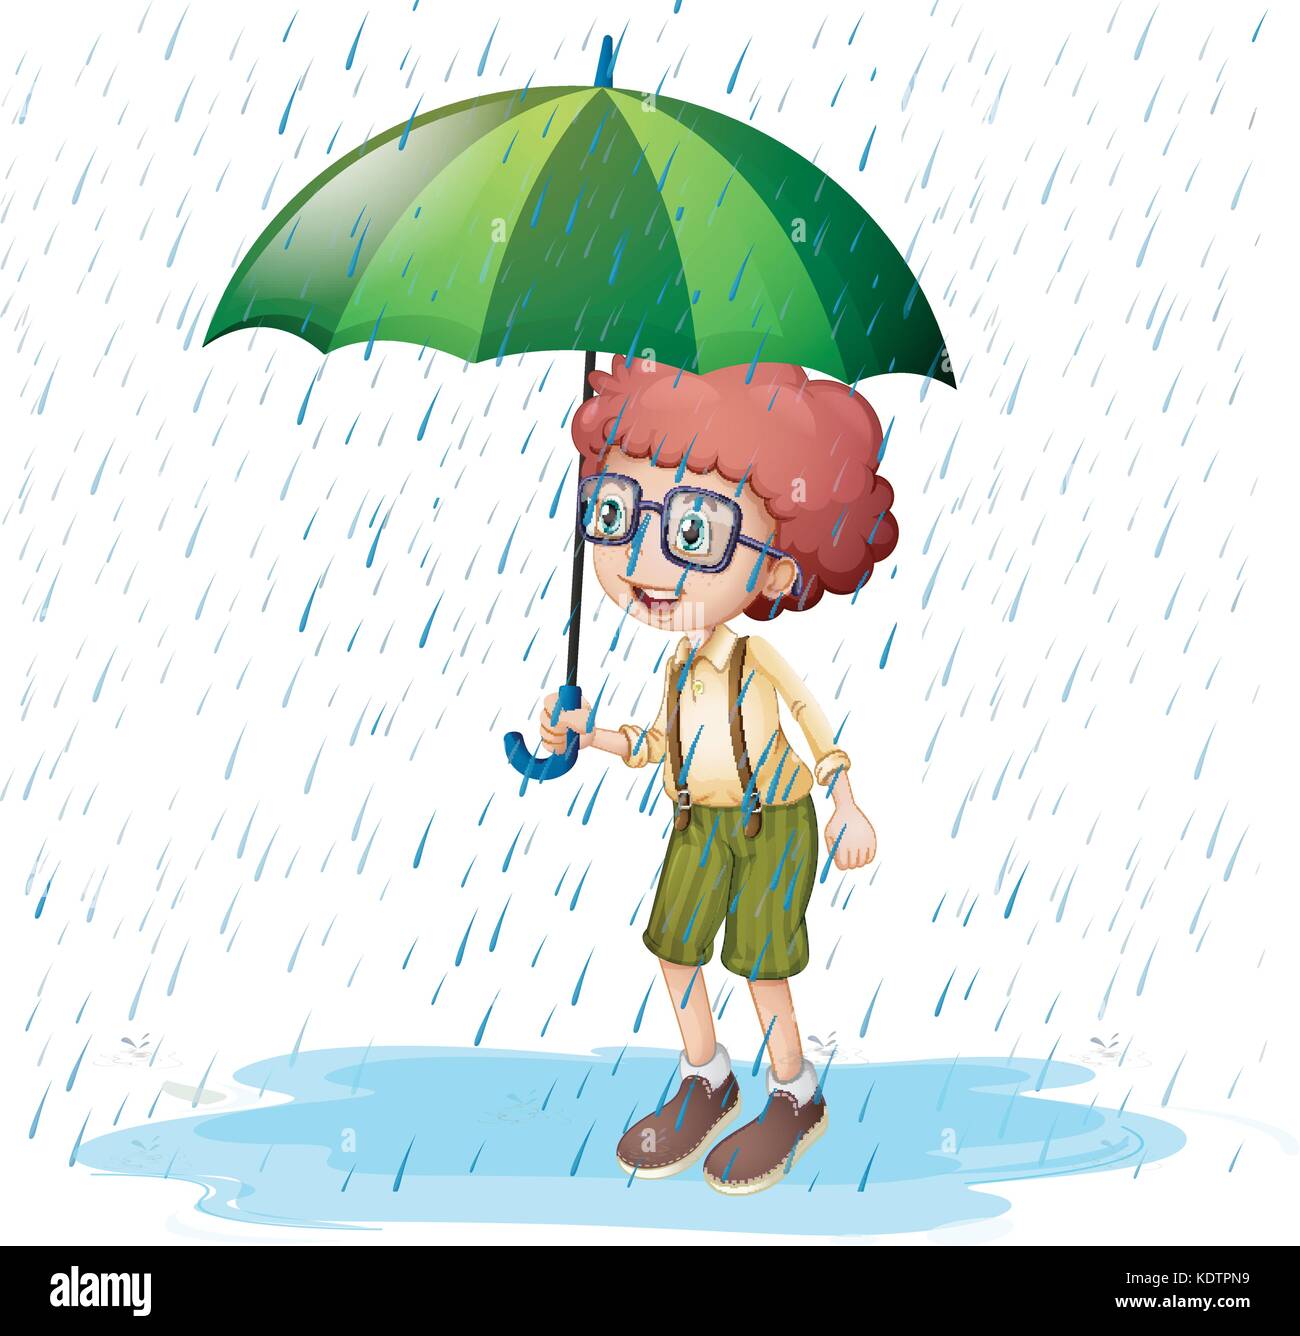 Little boy standing in rain illustration Stock Vector